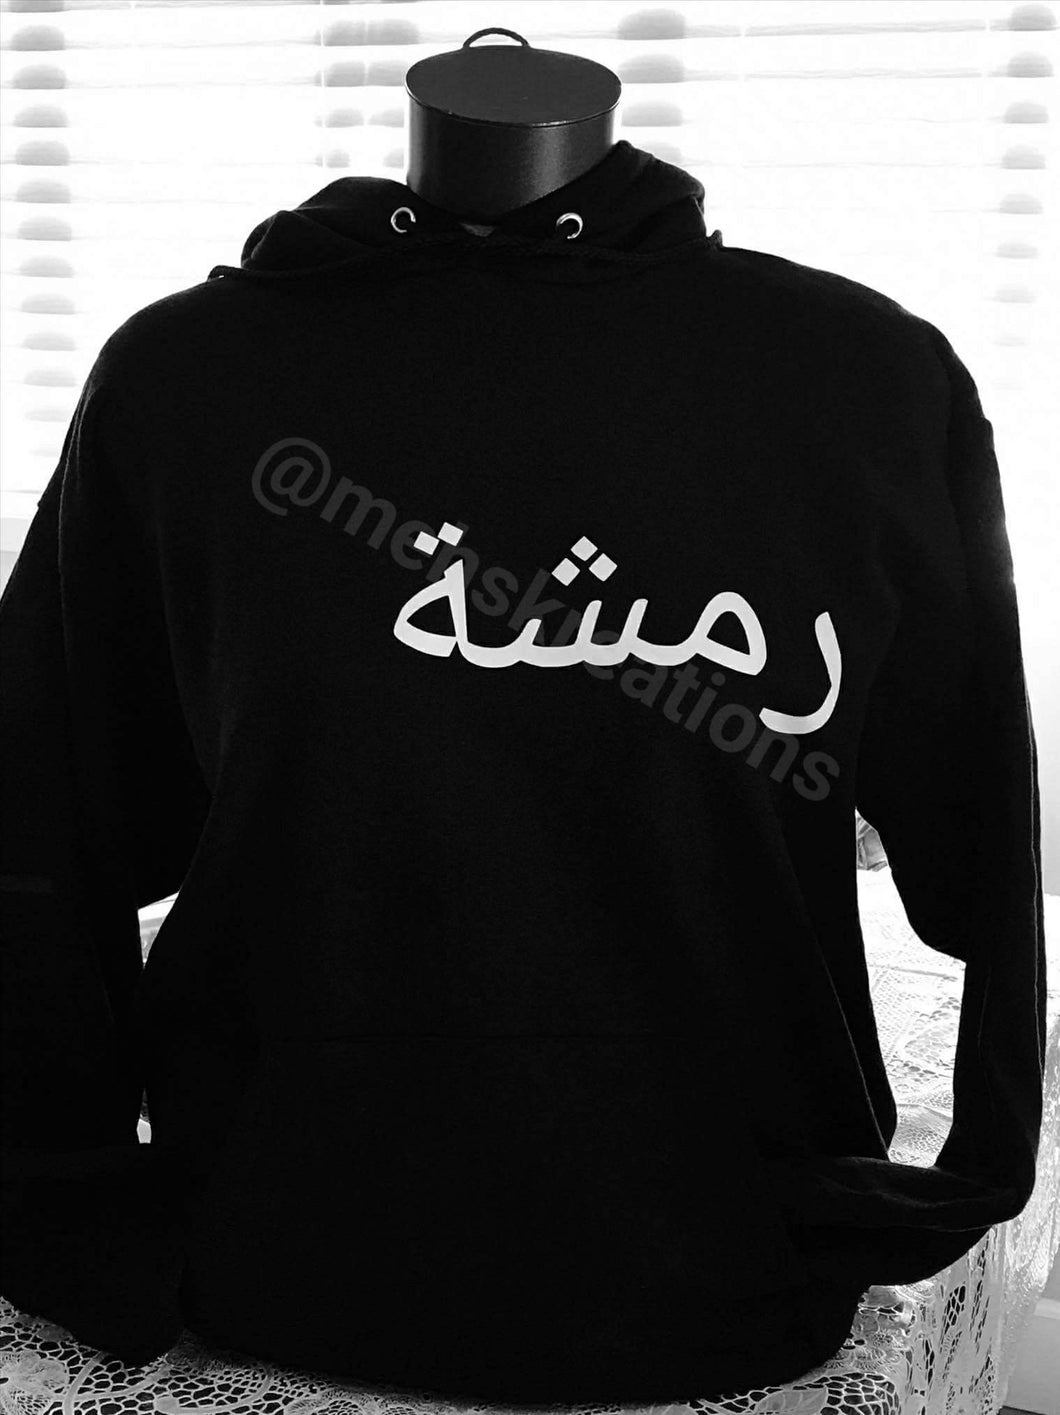 Customized Arabic name hoodie